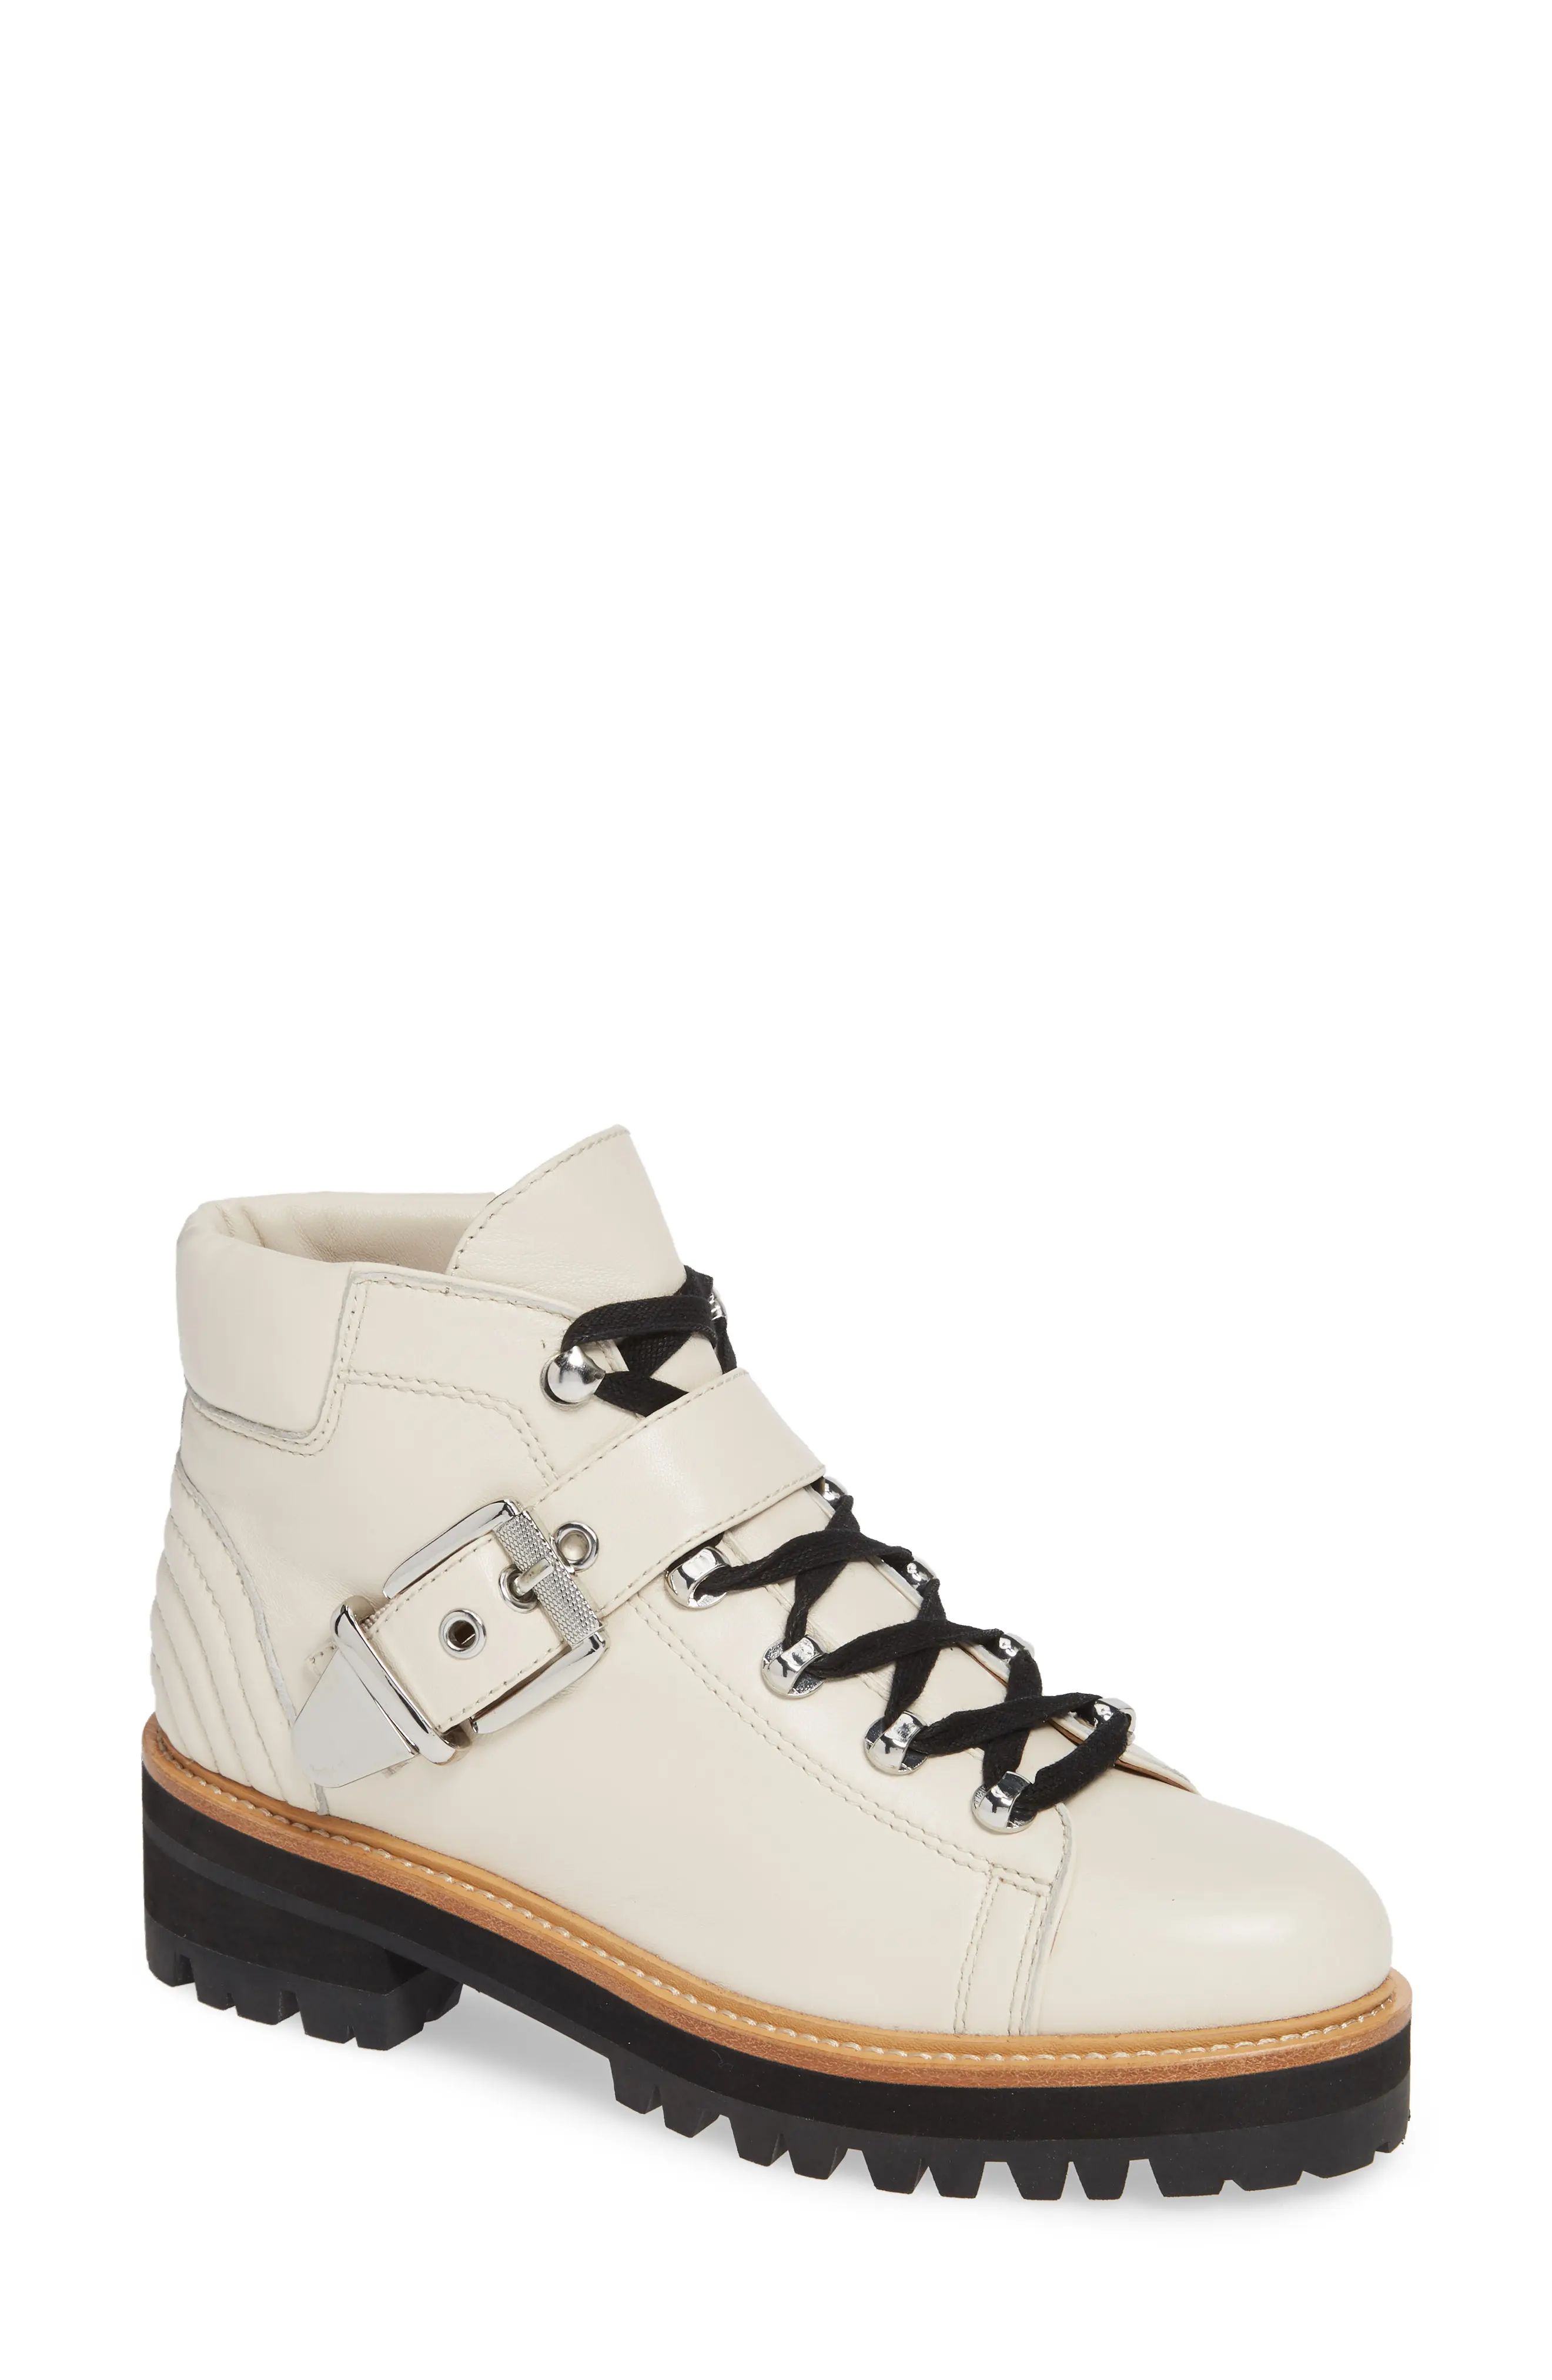 Women's Marc Fisher Ltd Indre Platform Boot, Size 10 M - White | Nordstrom